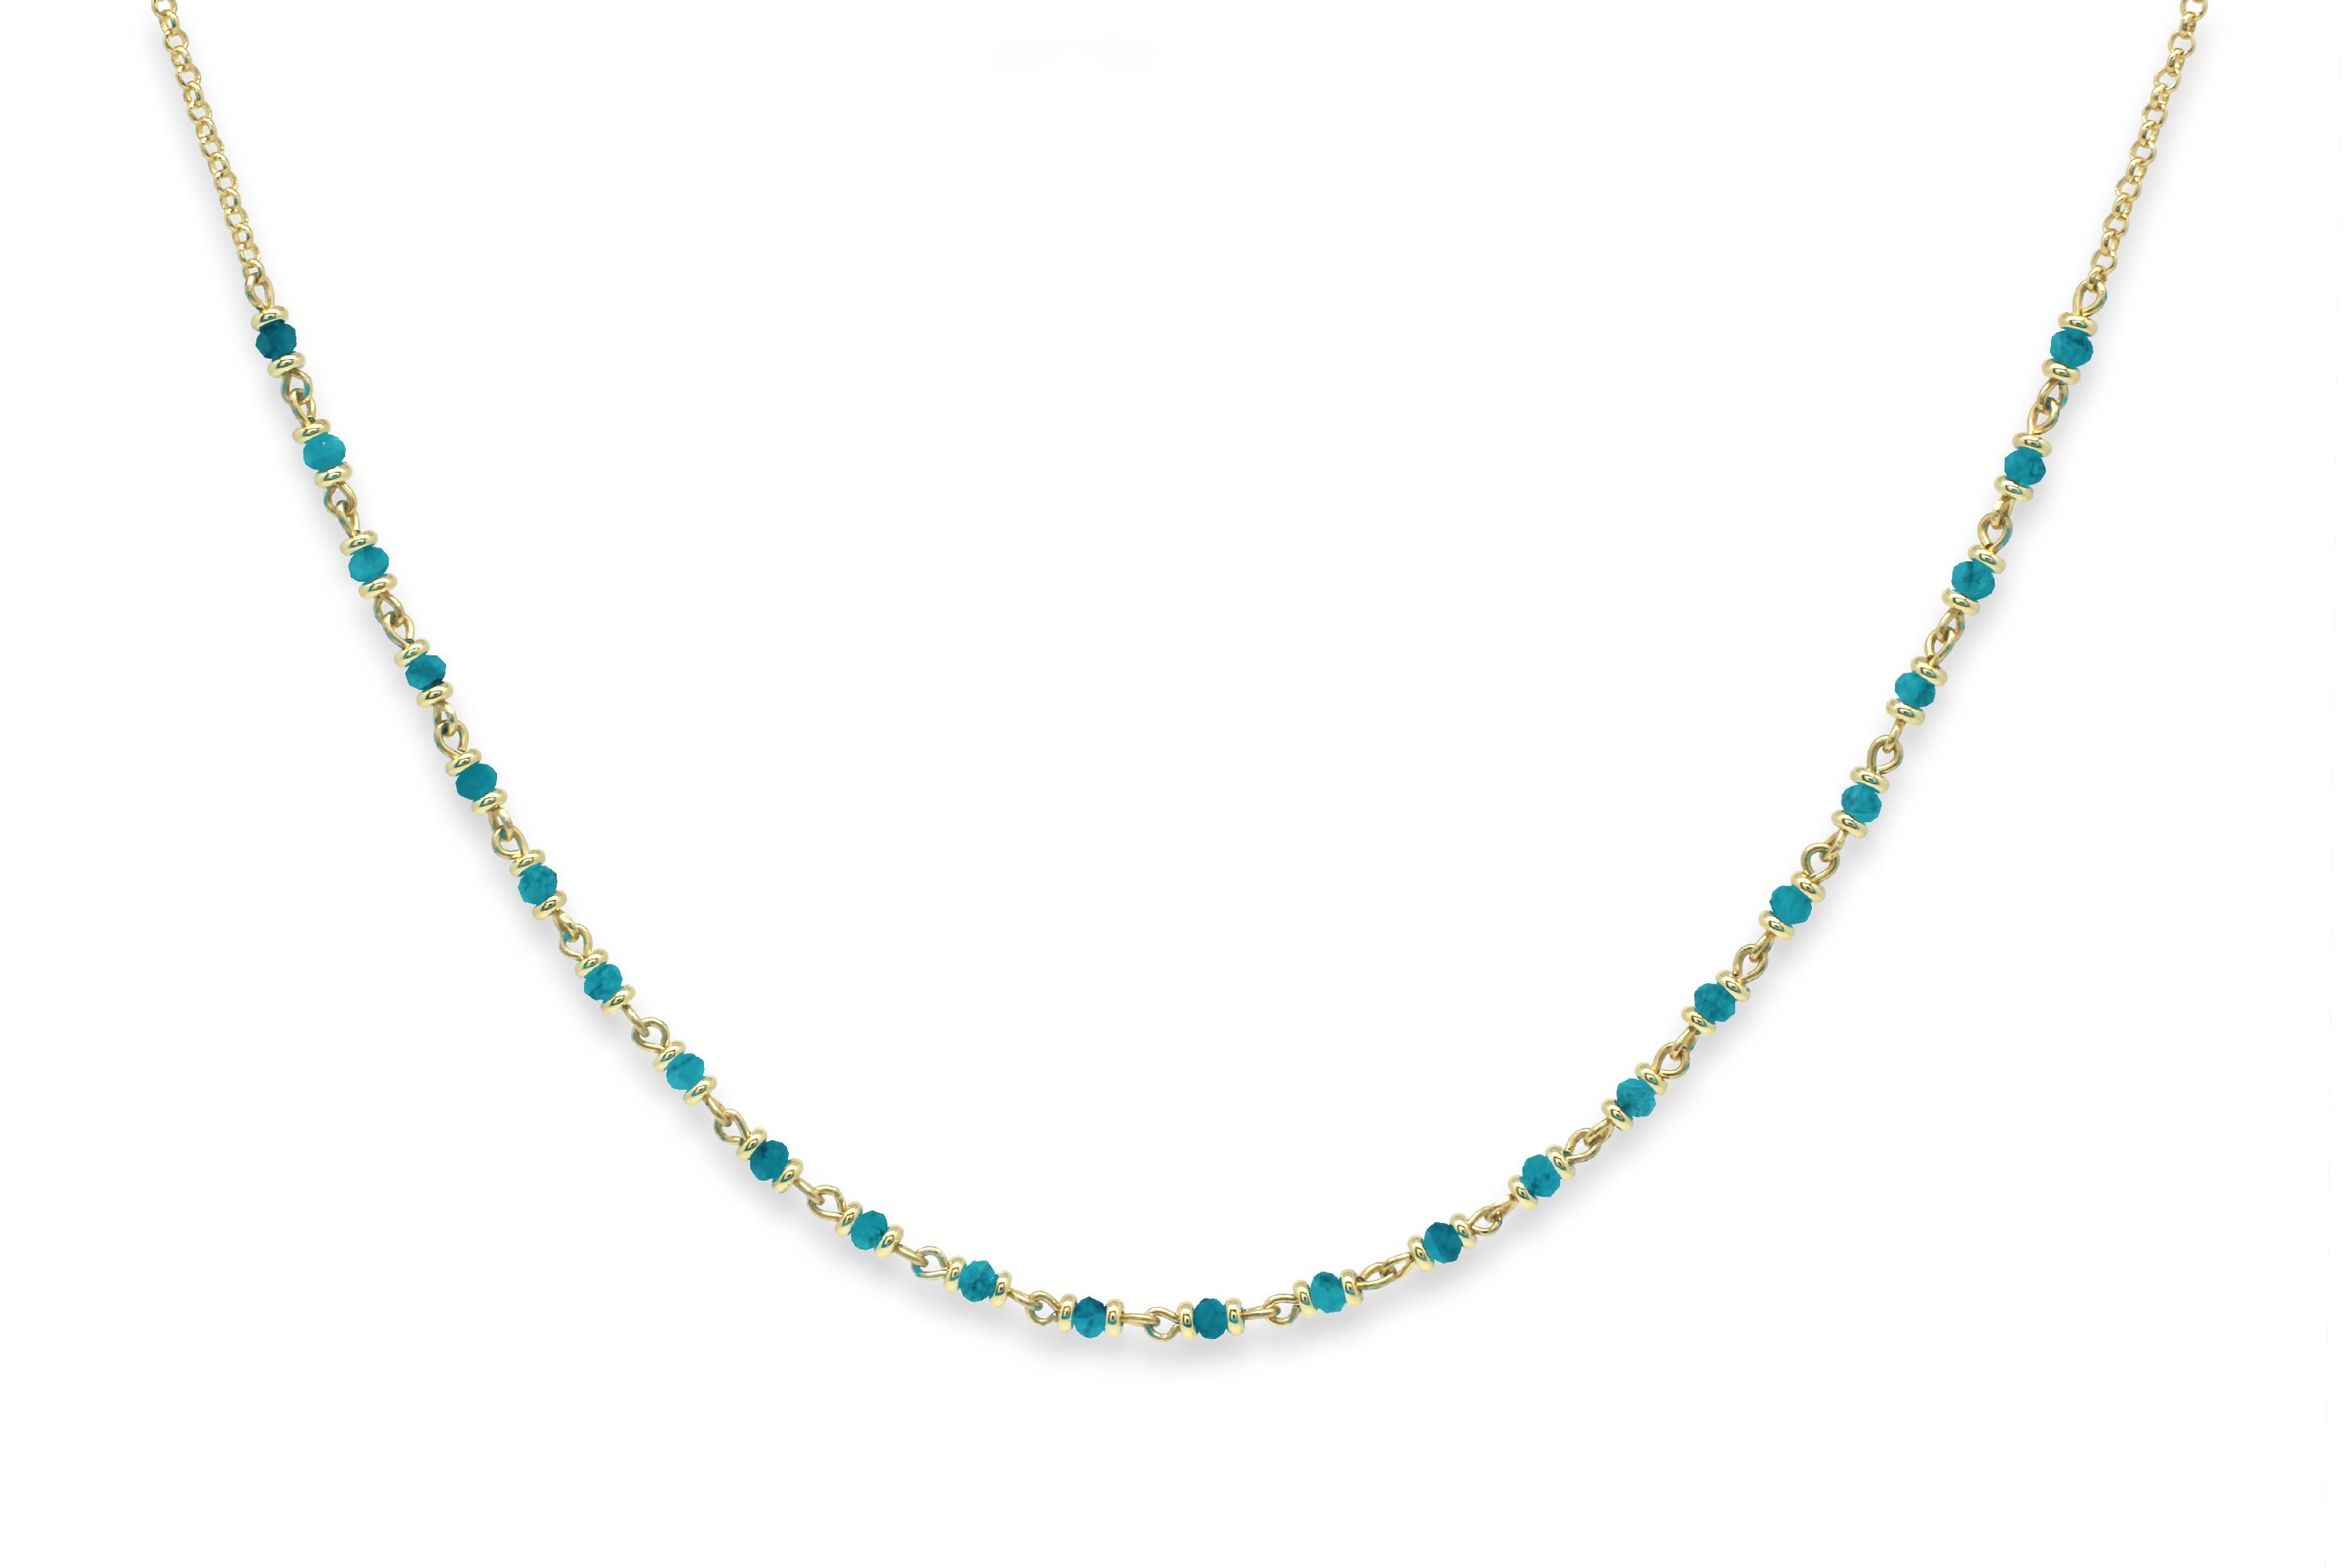 Order necklaces & pendants in diamond | GLAMIRA.co.uk